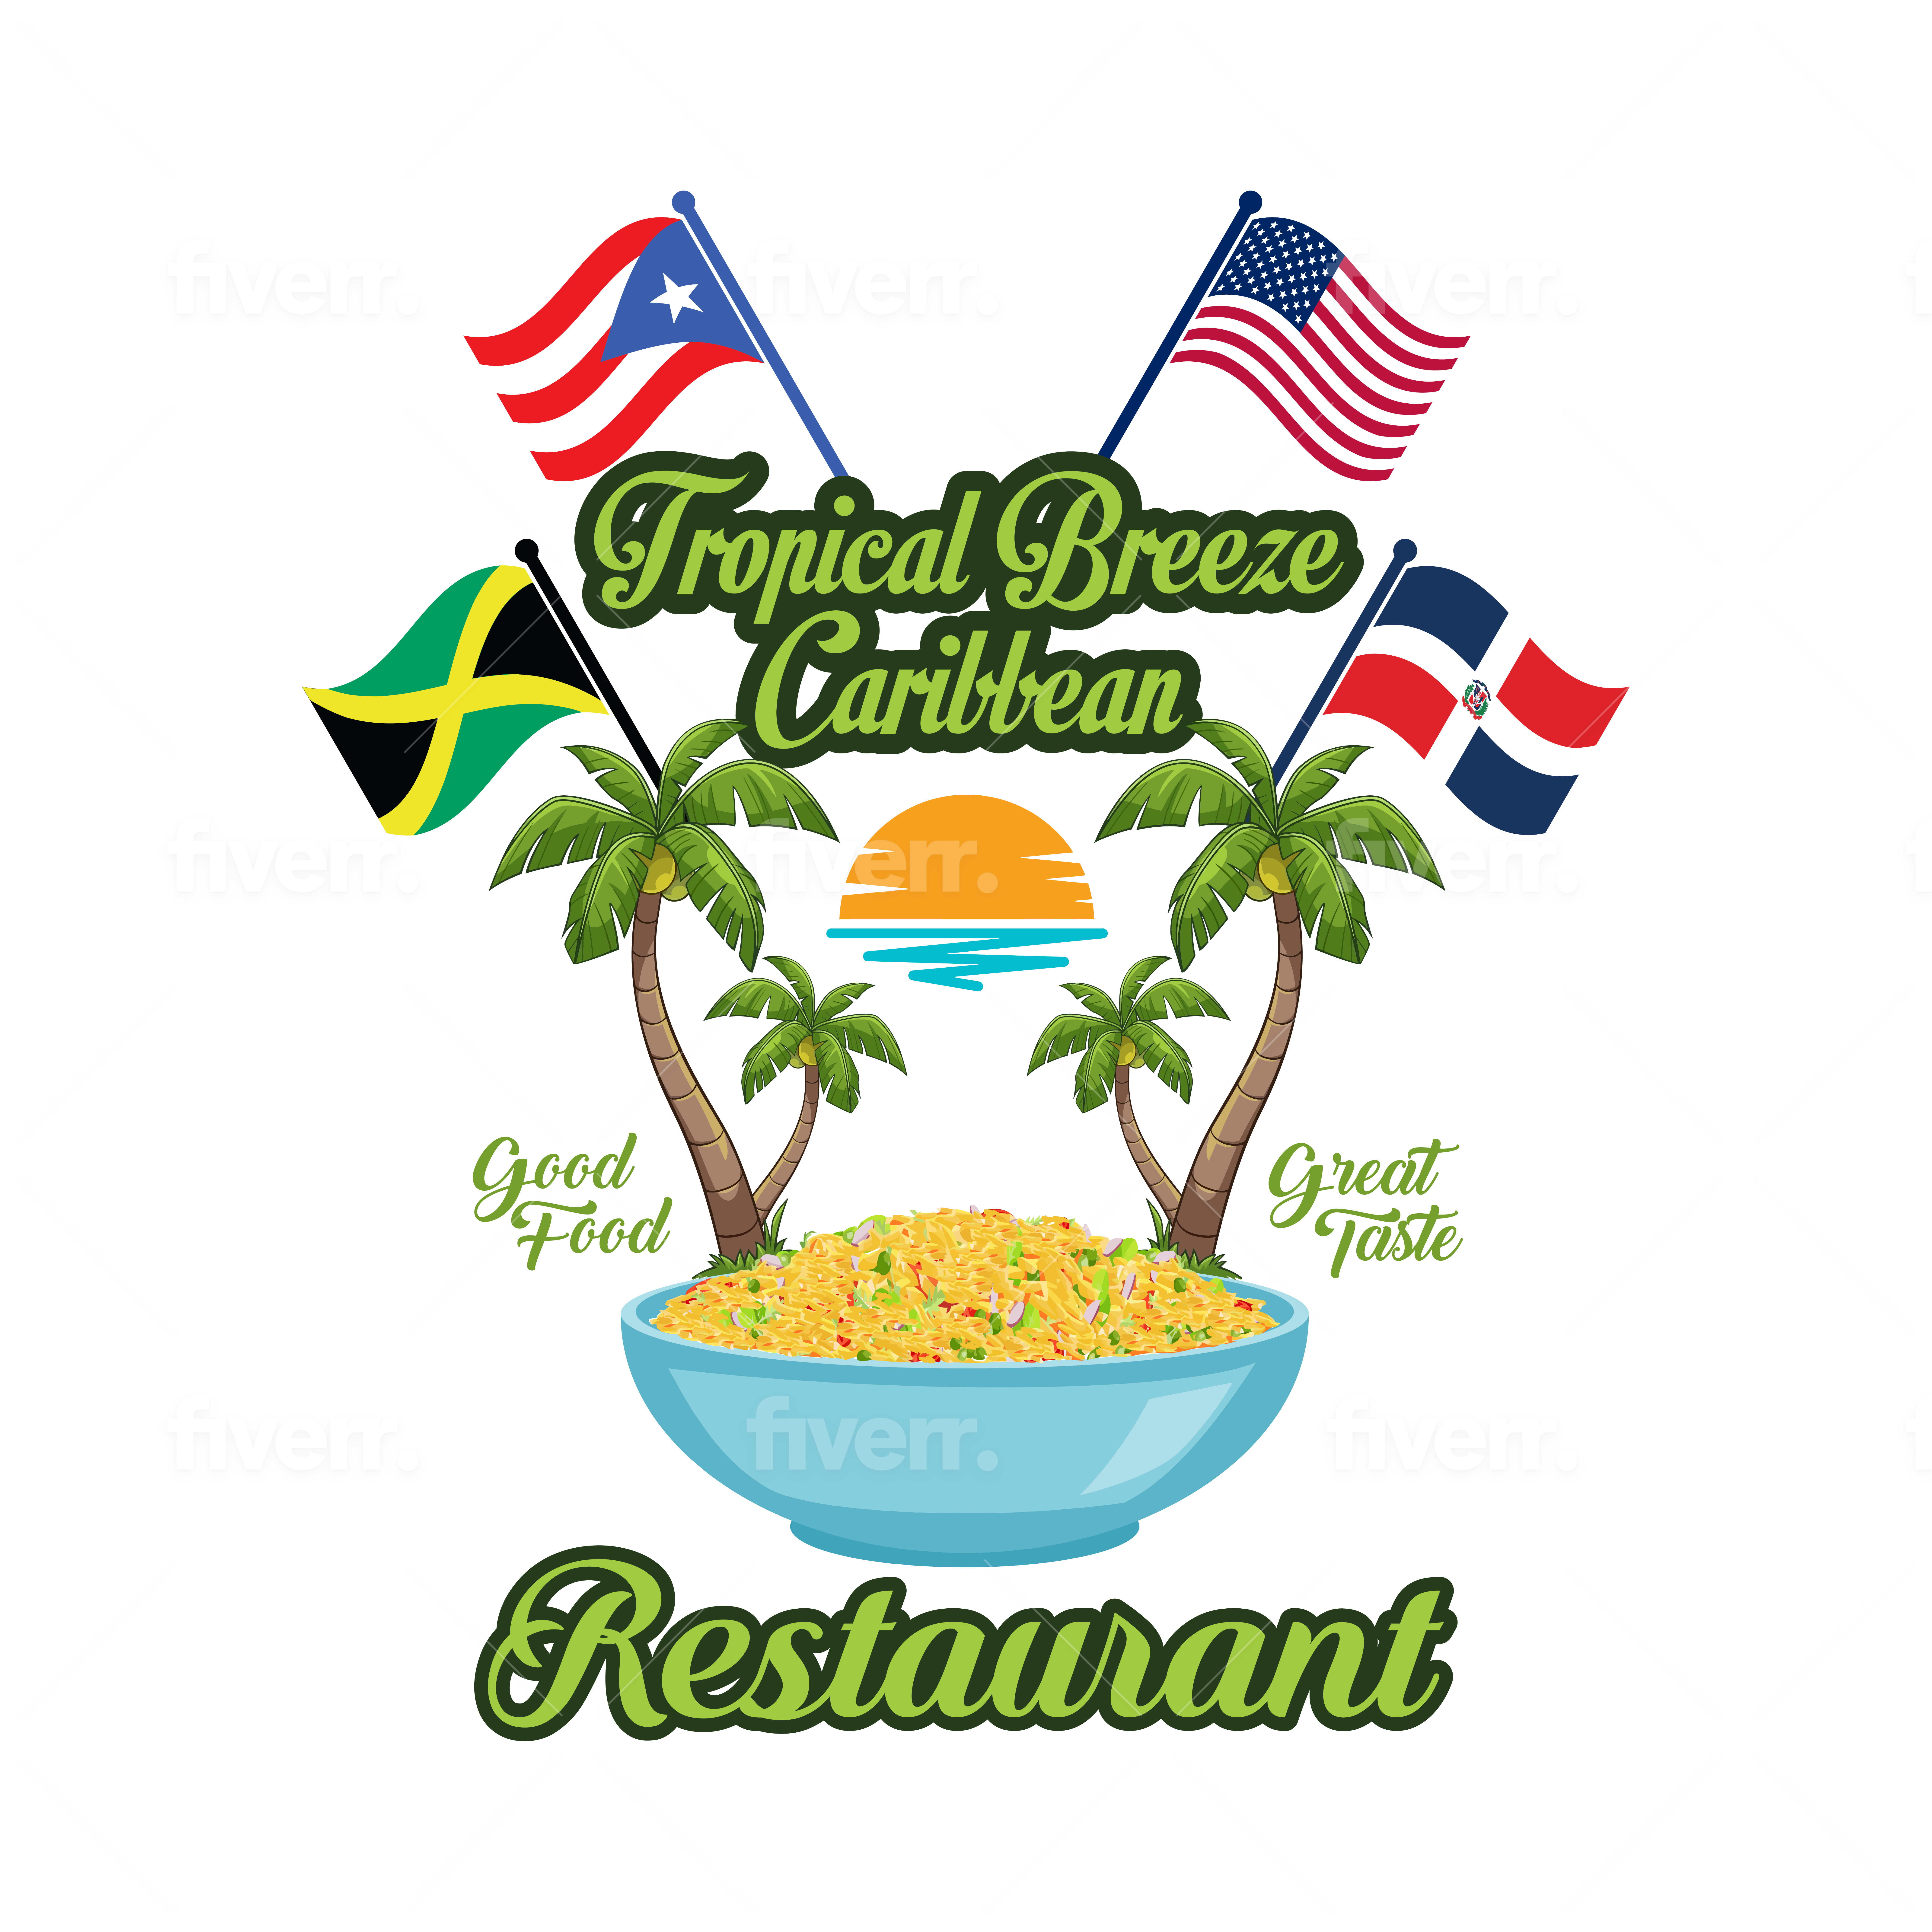 Tropical Breeze Caribbean Restaurant - Good Food, Great Taste